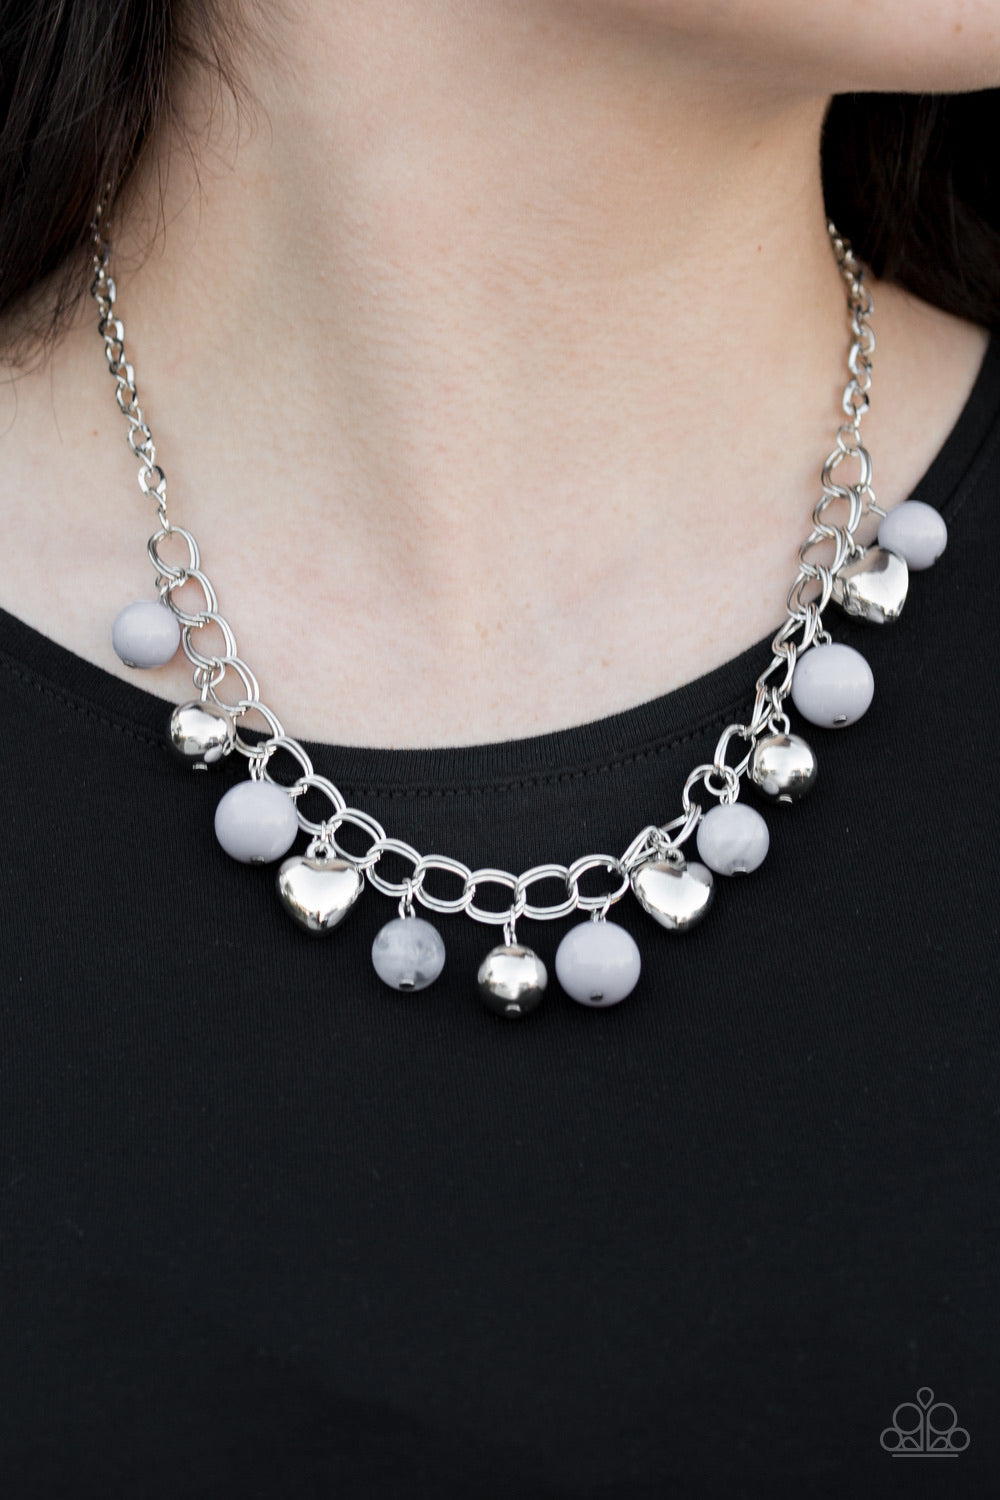 Summer Fling - Silver necklace